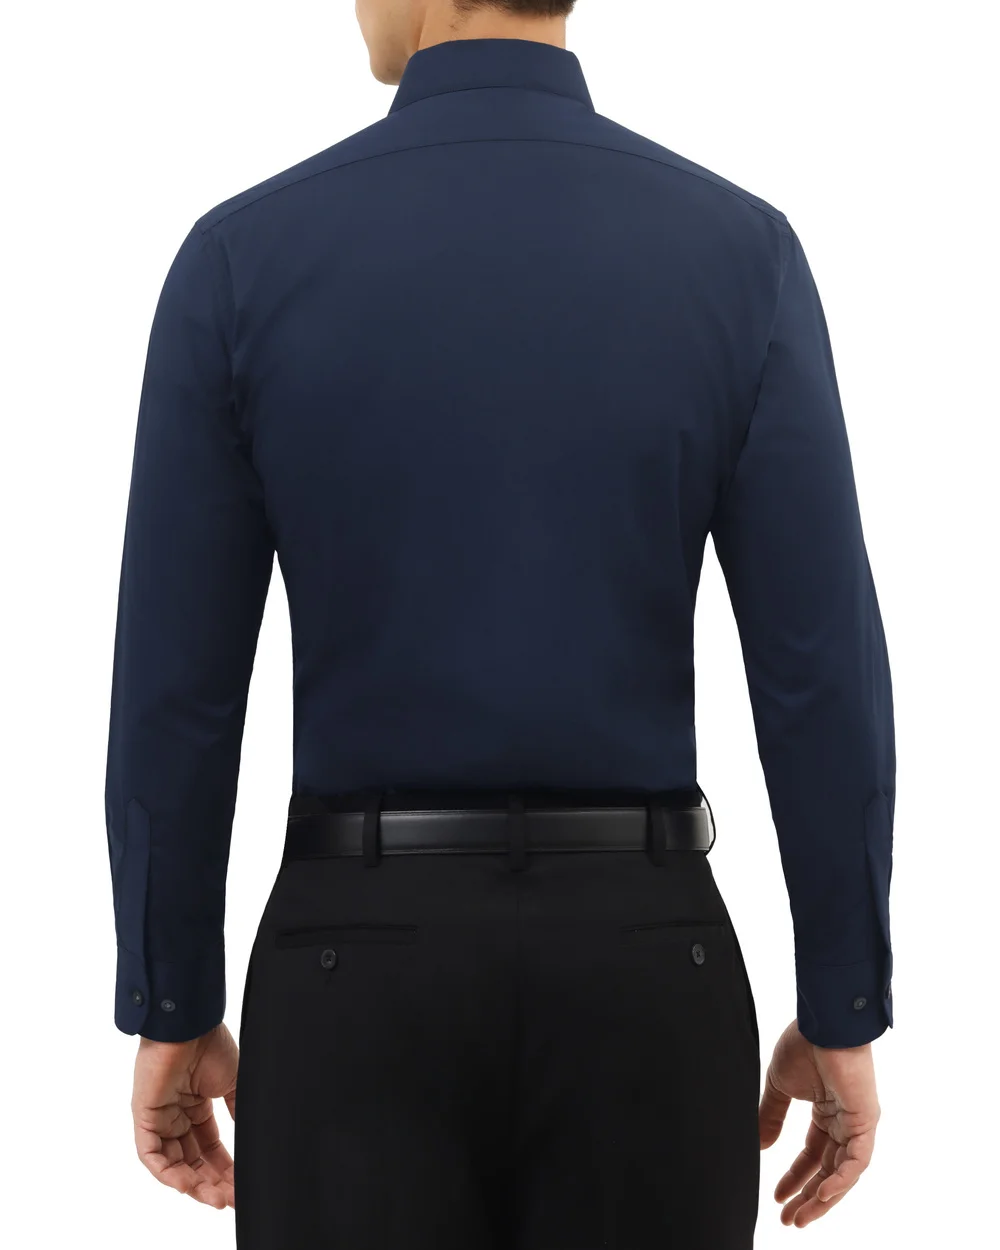 Camisa de vestir clásica azul navy manga larga slim fit